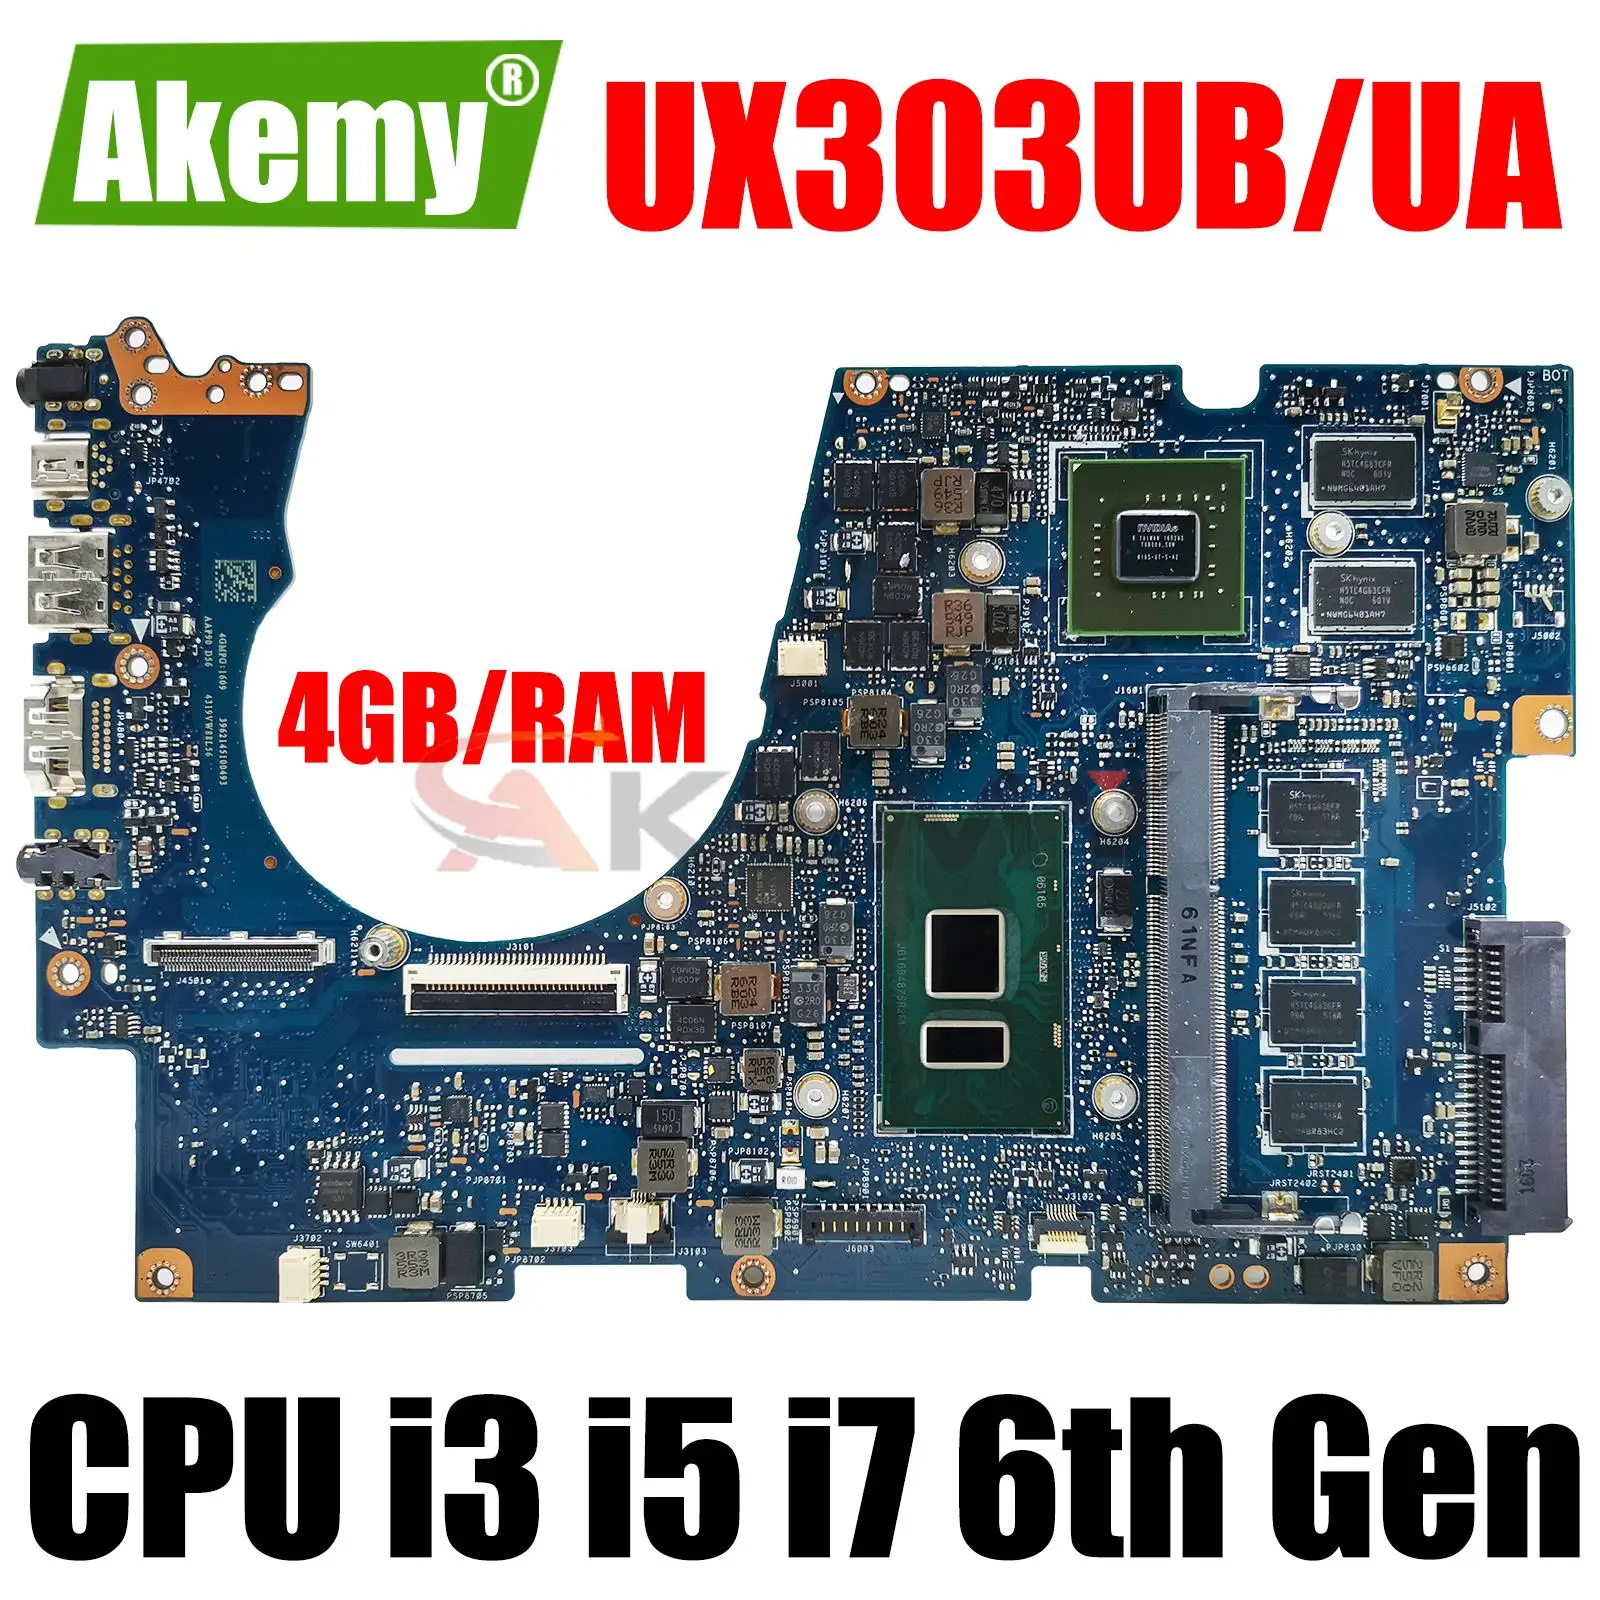 

UX303UB Mainboard UX303 UX303U BX303UA UX303UA U303UB U303UA Laptop Motherboard CPU I3 I5 I7 6th Gen 4GB RAM GPU GT940M/UMA DDR3